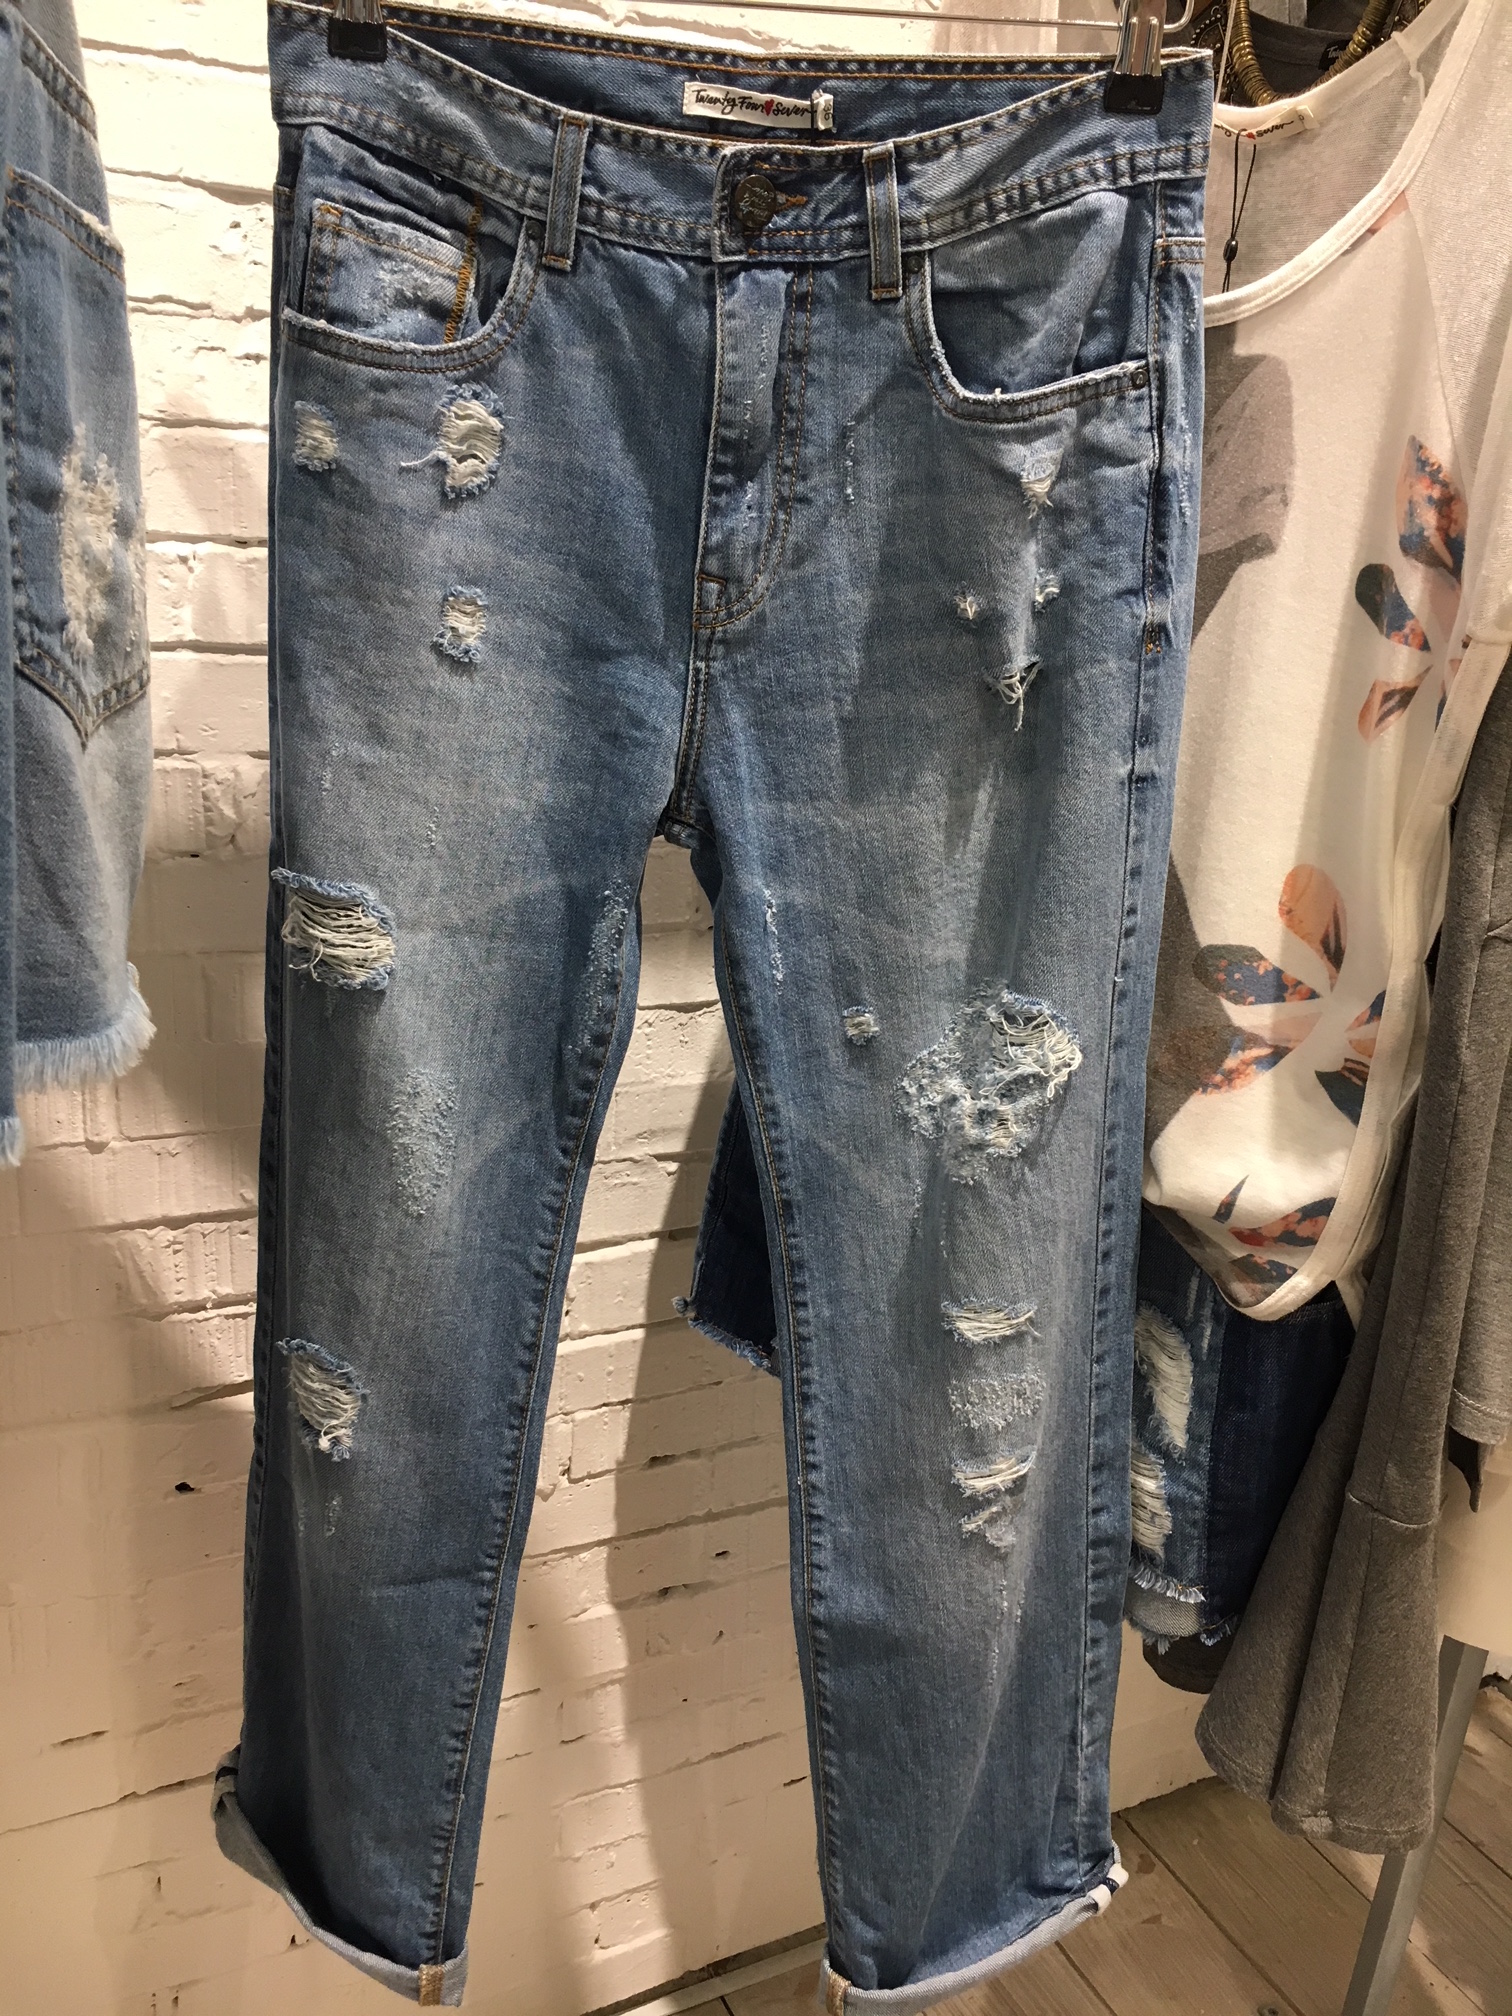 tfs-dez-jeans-pendurada